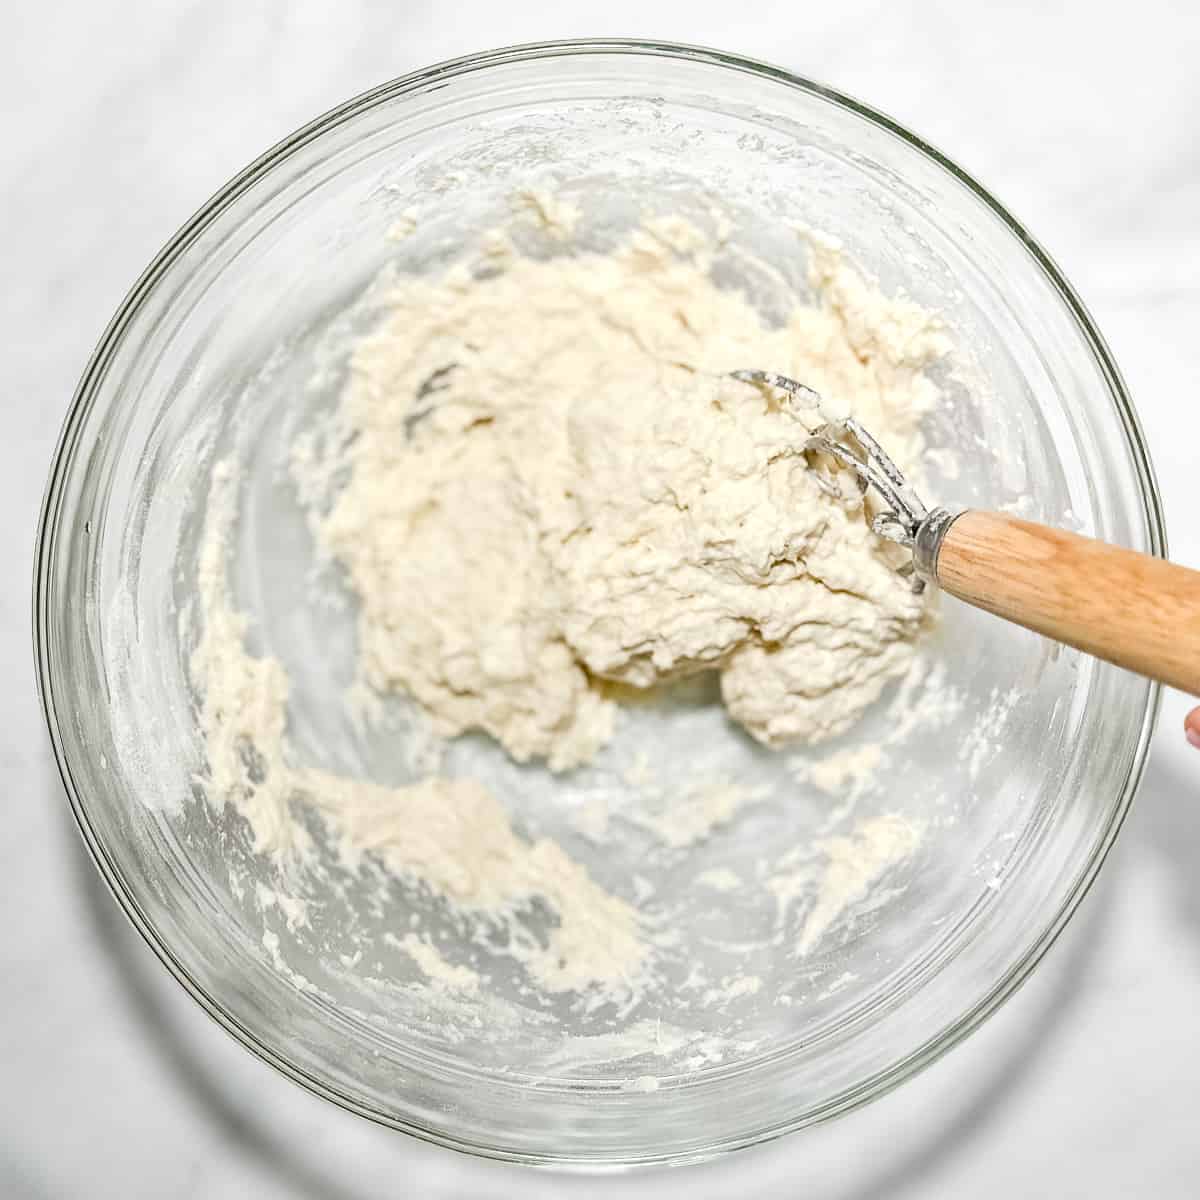 mixing no knead dough.